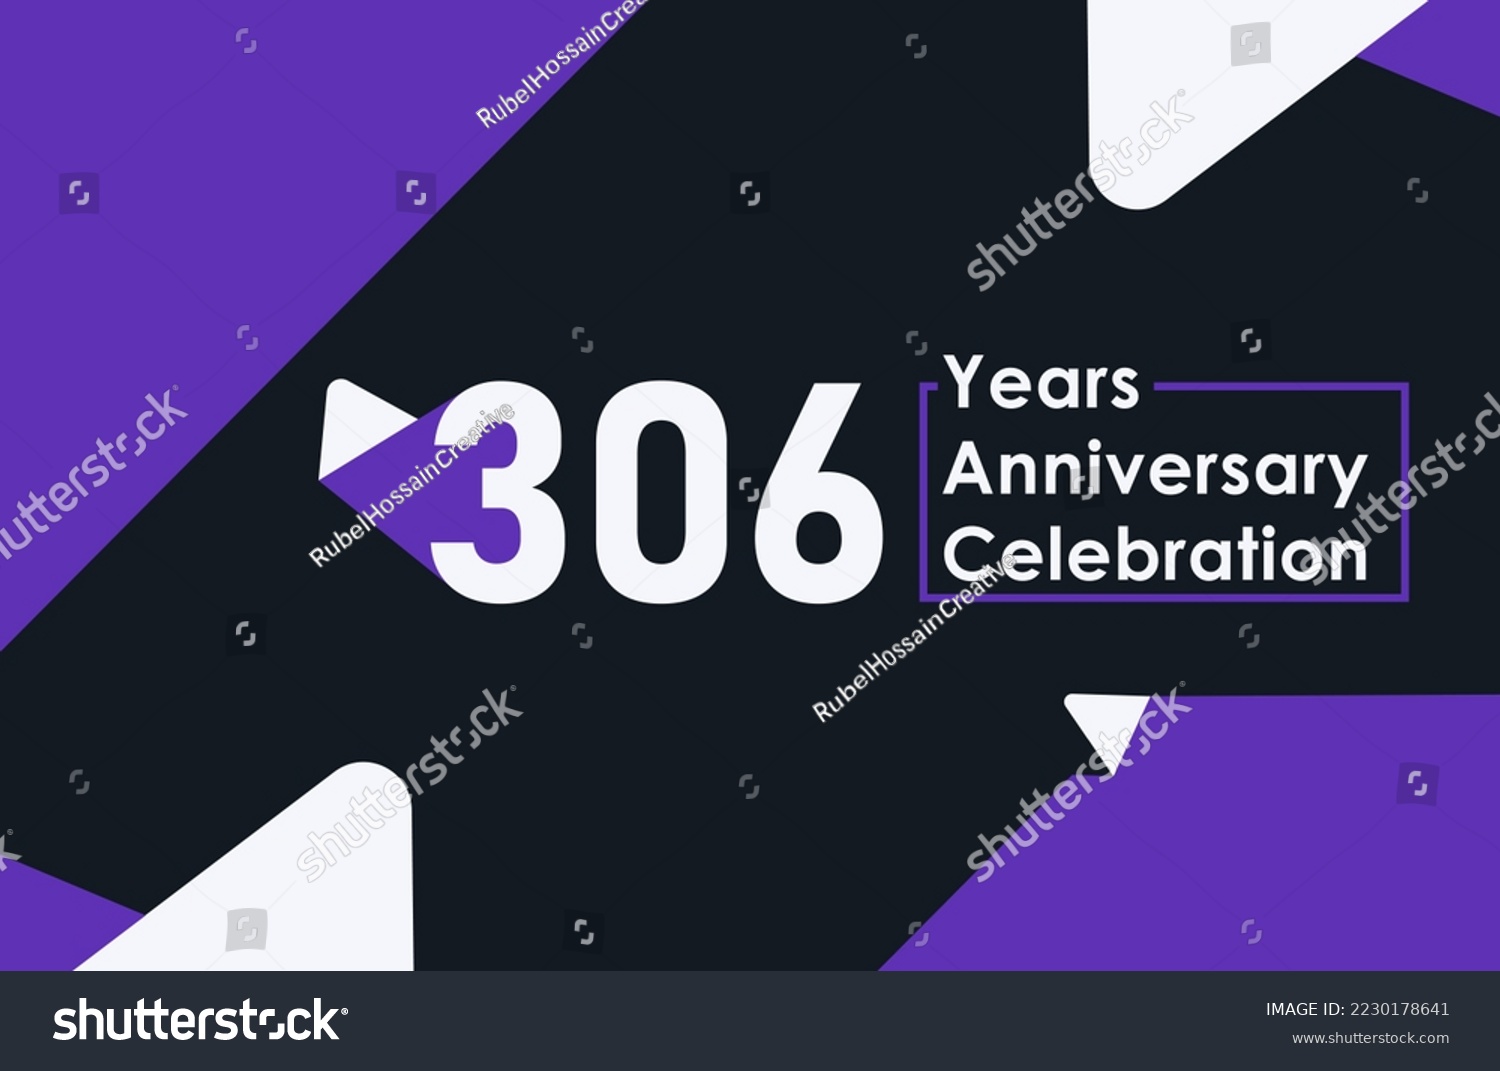 SVG of 306 years anniversary celebration modern banner template design svg